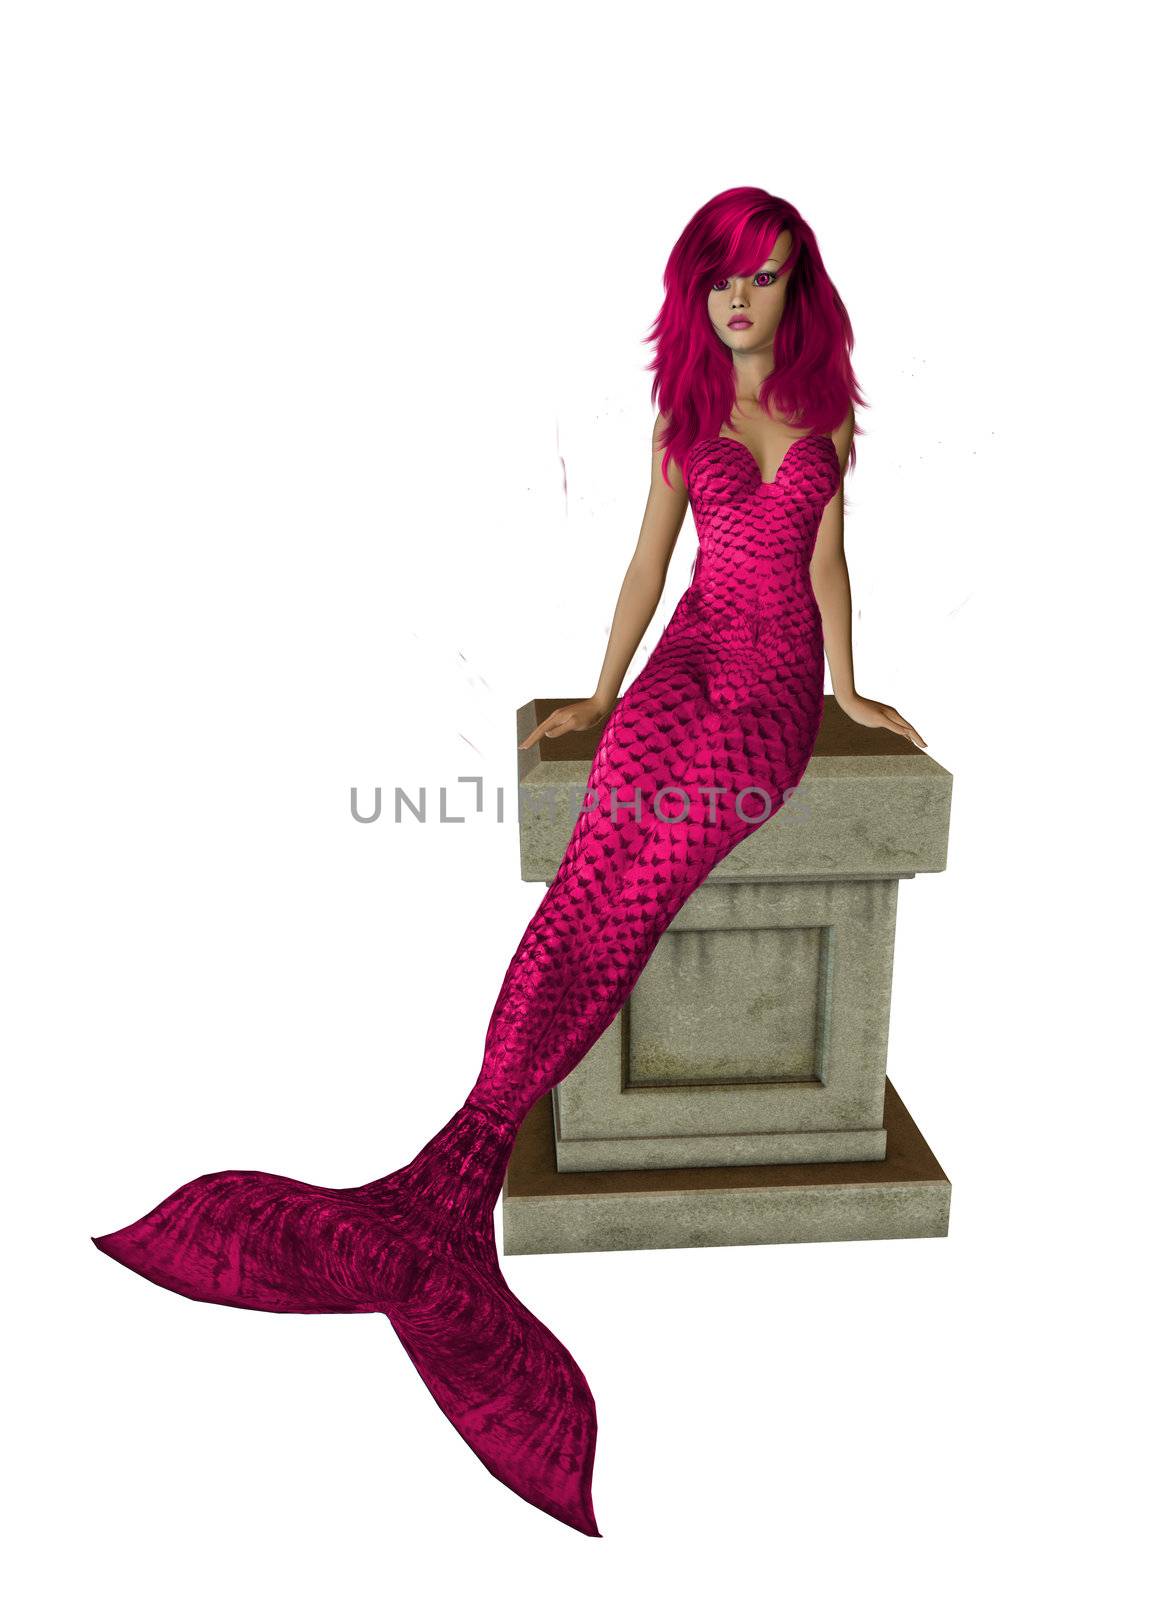 Pink Mermaid Sitting On A Pedestal by kathygold